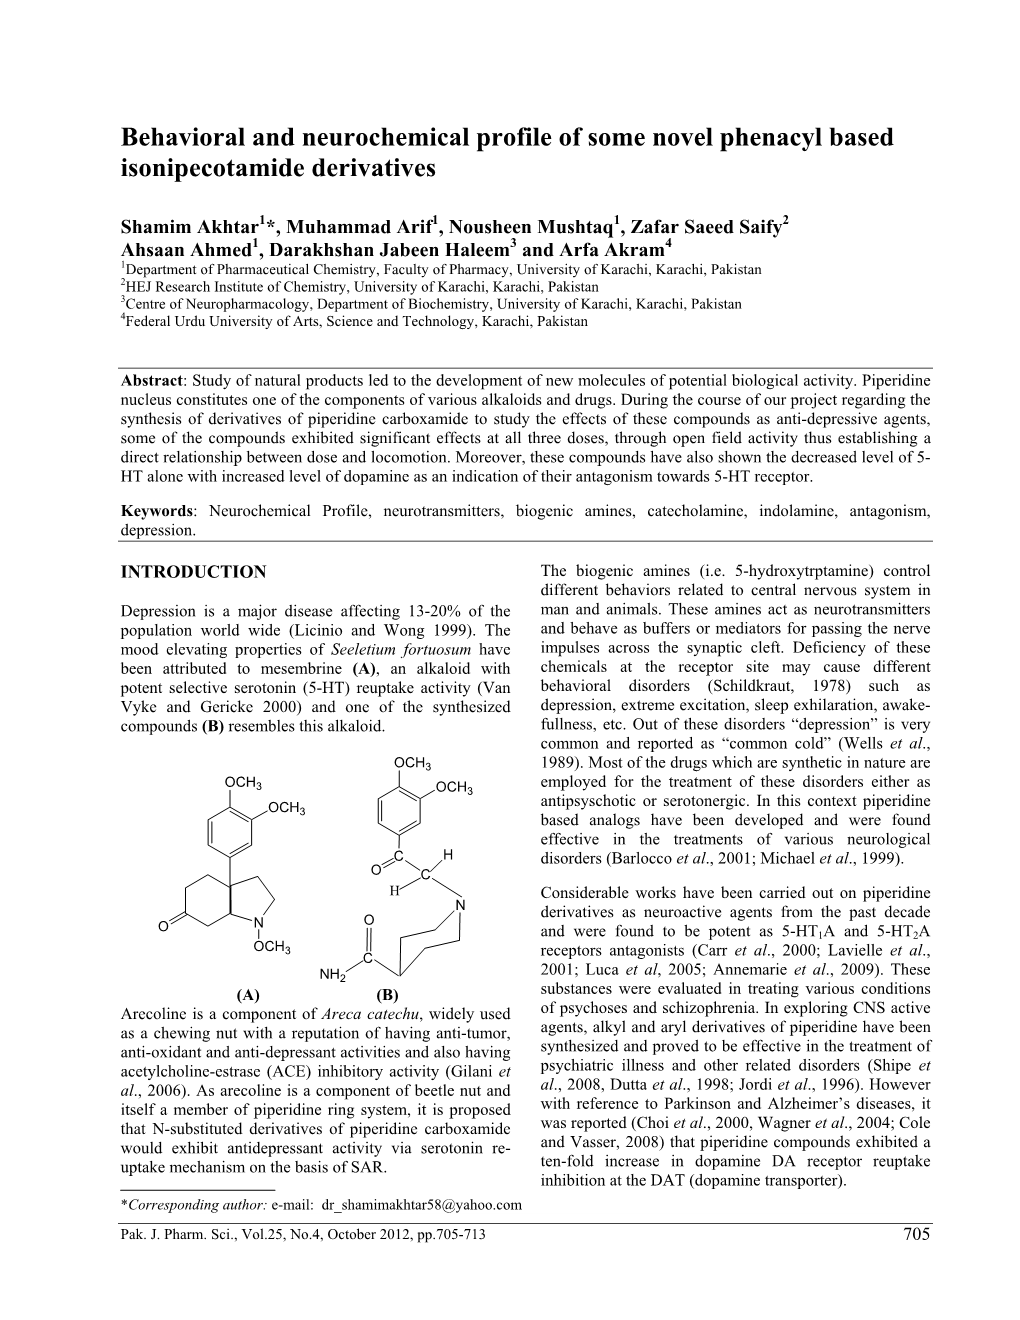 Behavioral and Neurochemical Profile of Some Novel Phenacyl Based Isonipecotamide Derivatives